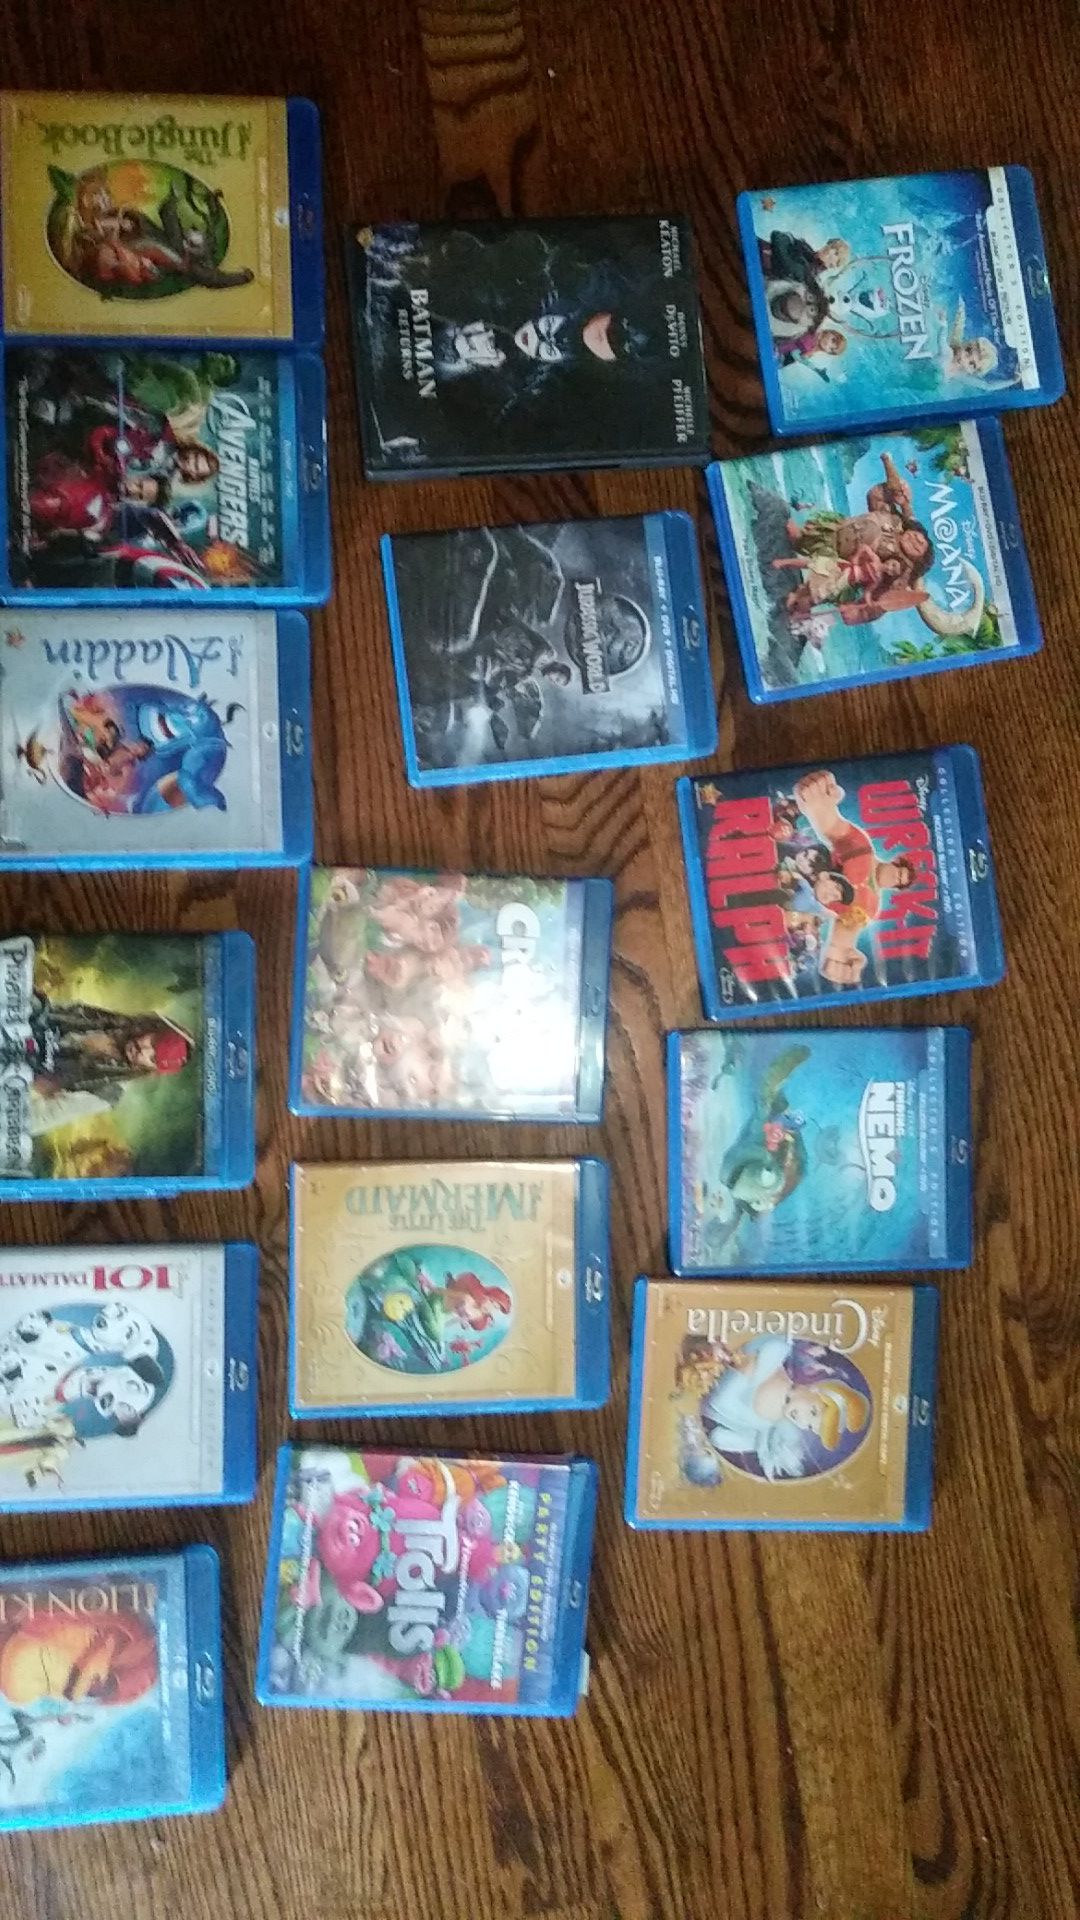 Only dvd copies Disney movies